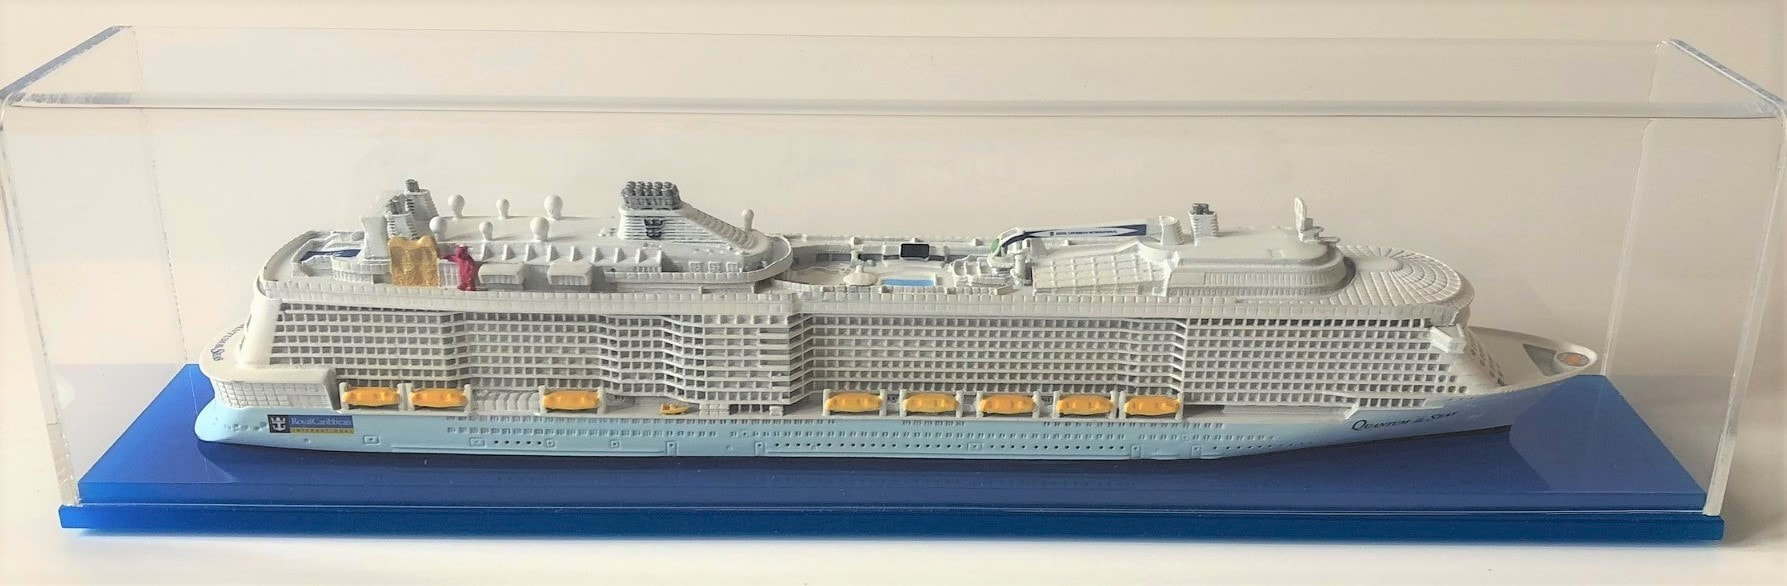 Quantum of the Seas cruise ship model in case